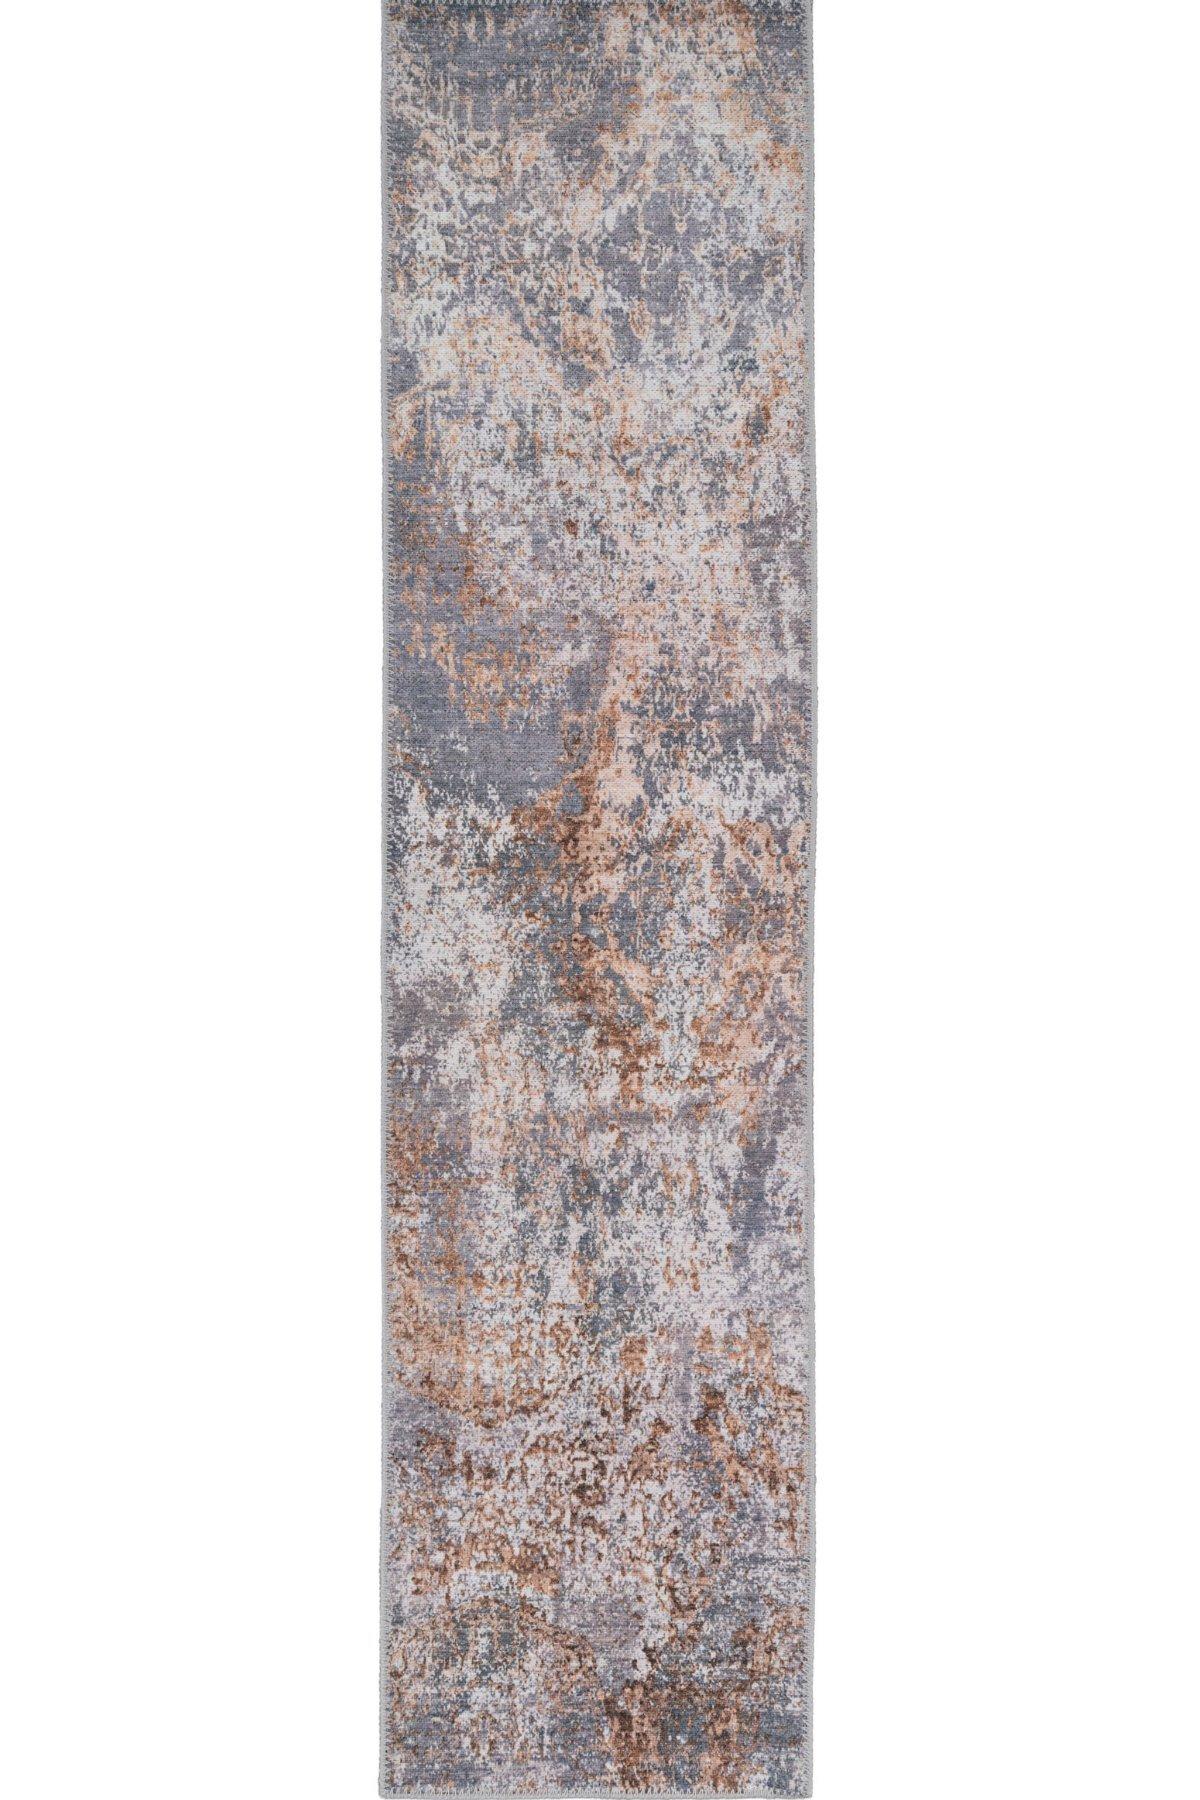 Metalic Grey Distressed Hallway Runner Rug Non Slip & Washable